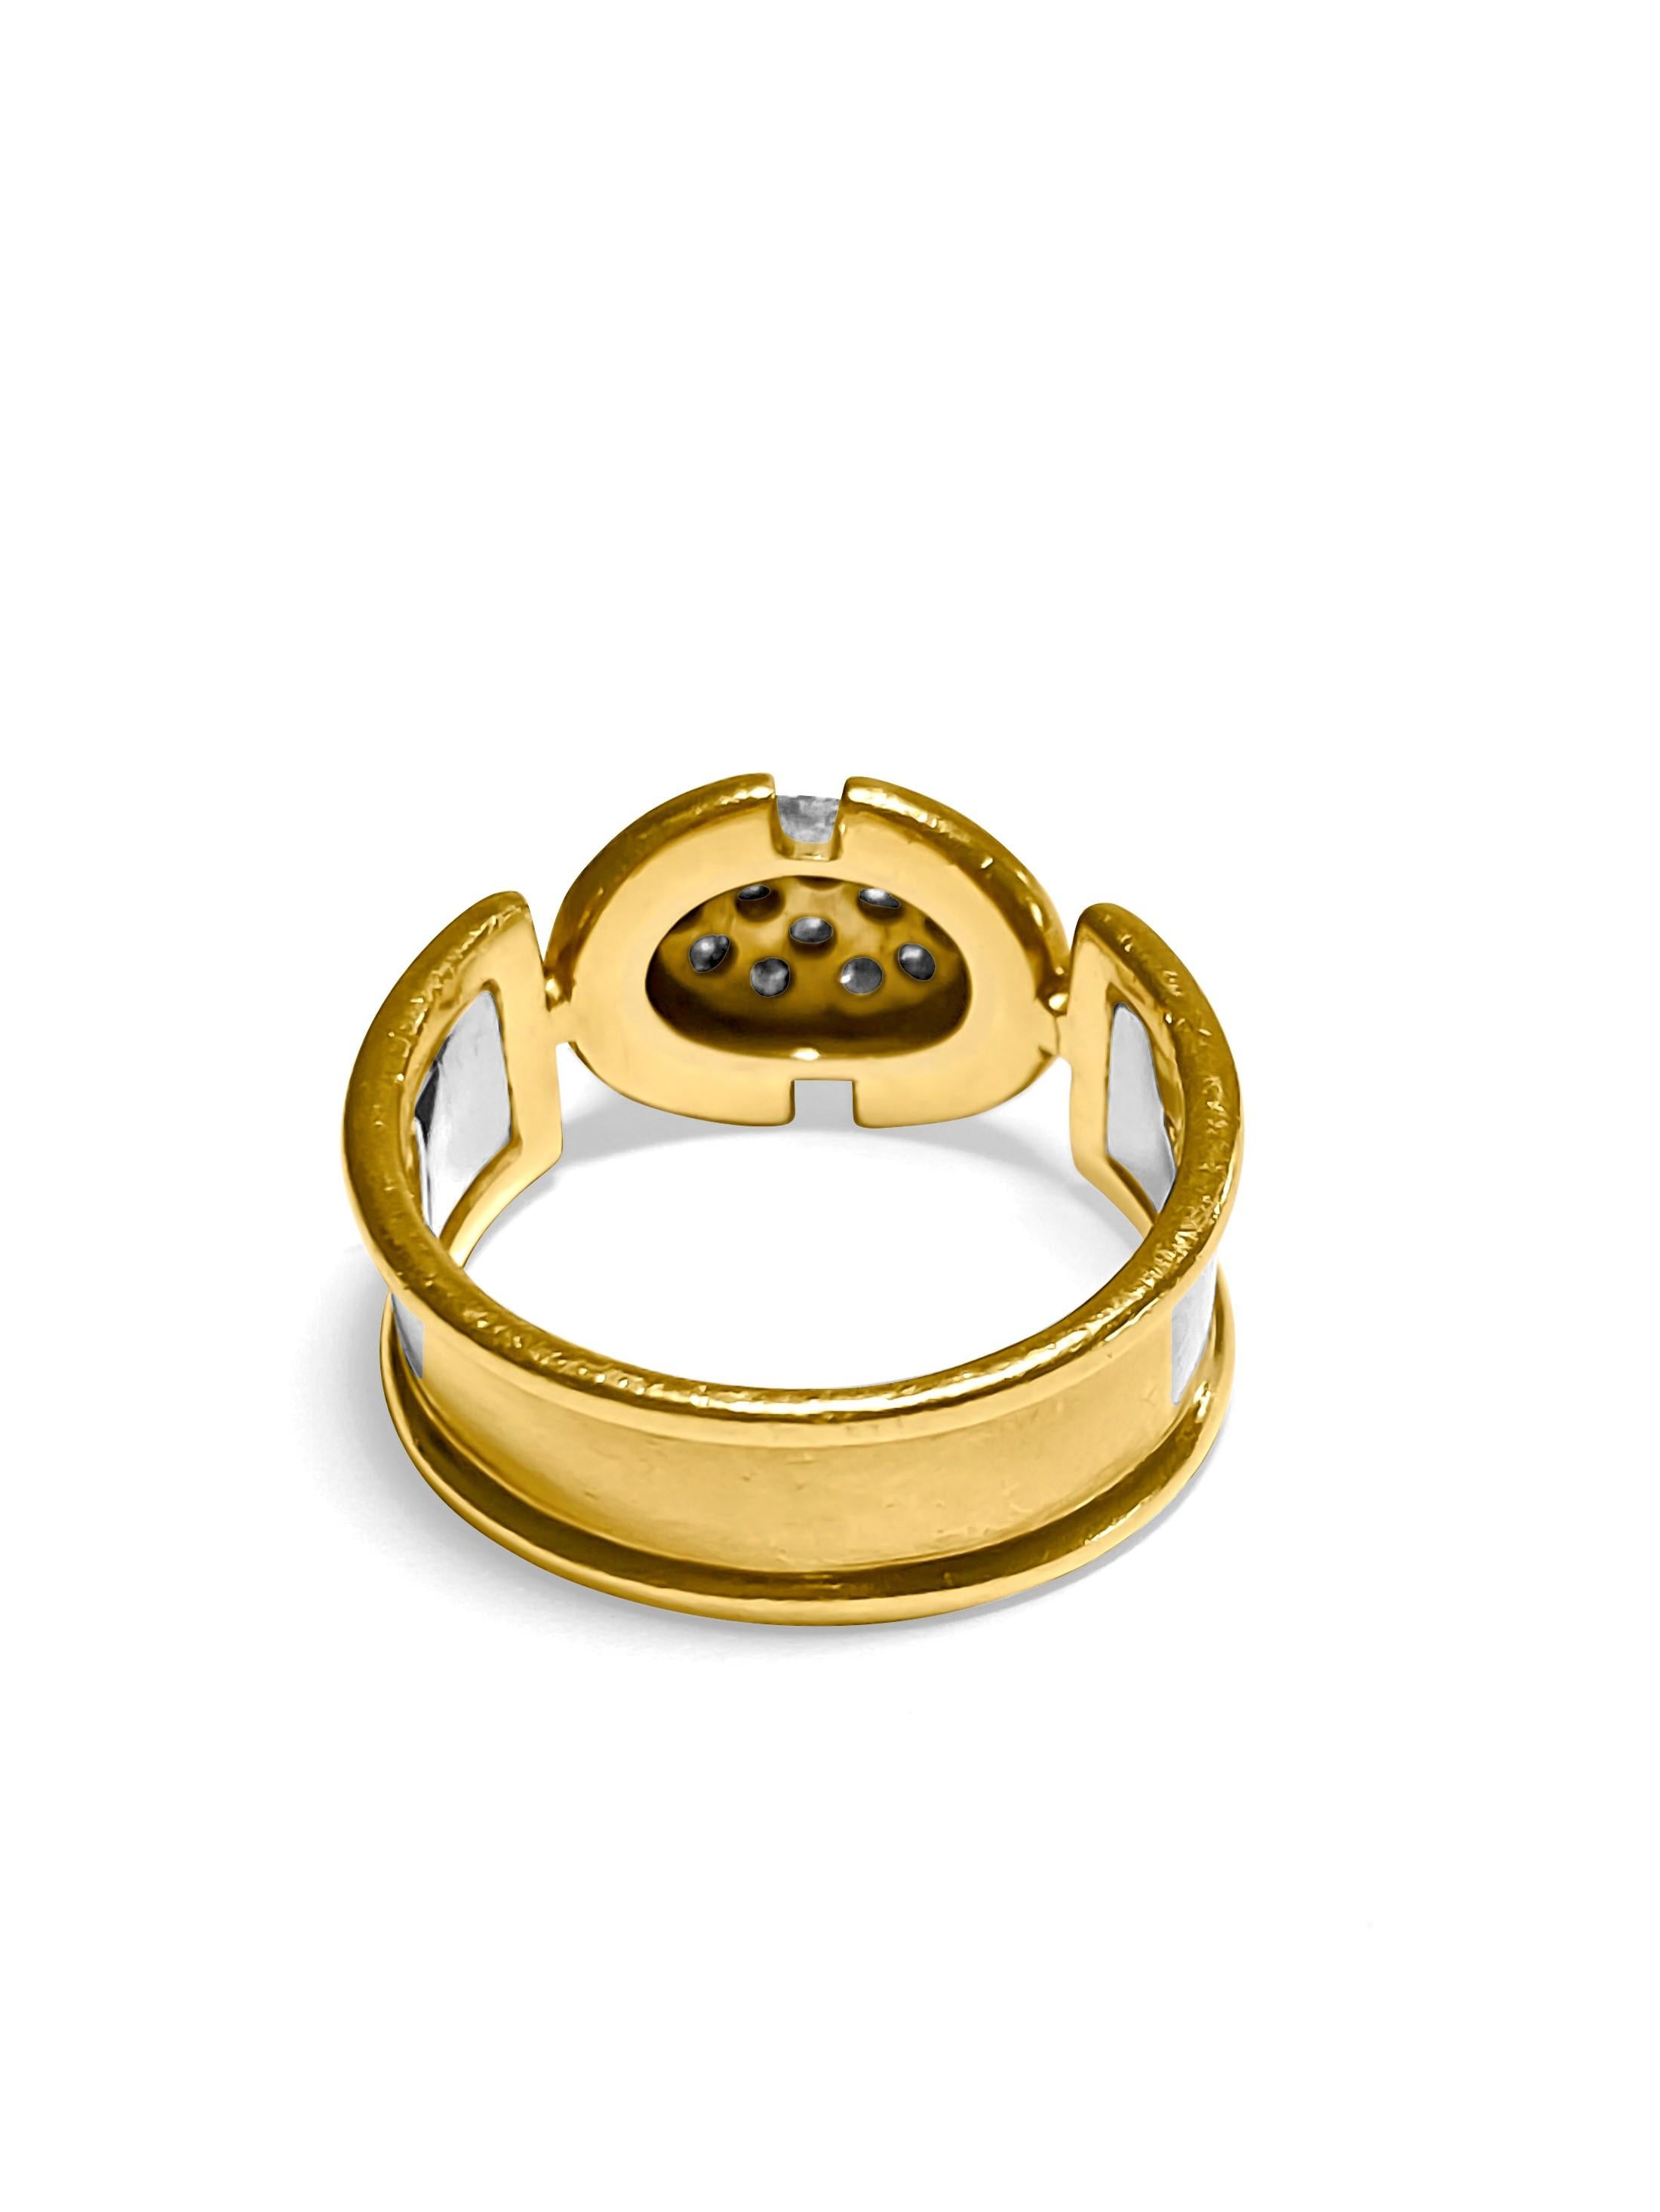 Round Cut 0.70 Carat Diamond Two-Tone Gold Art Nouveau Ring For Sale